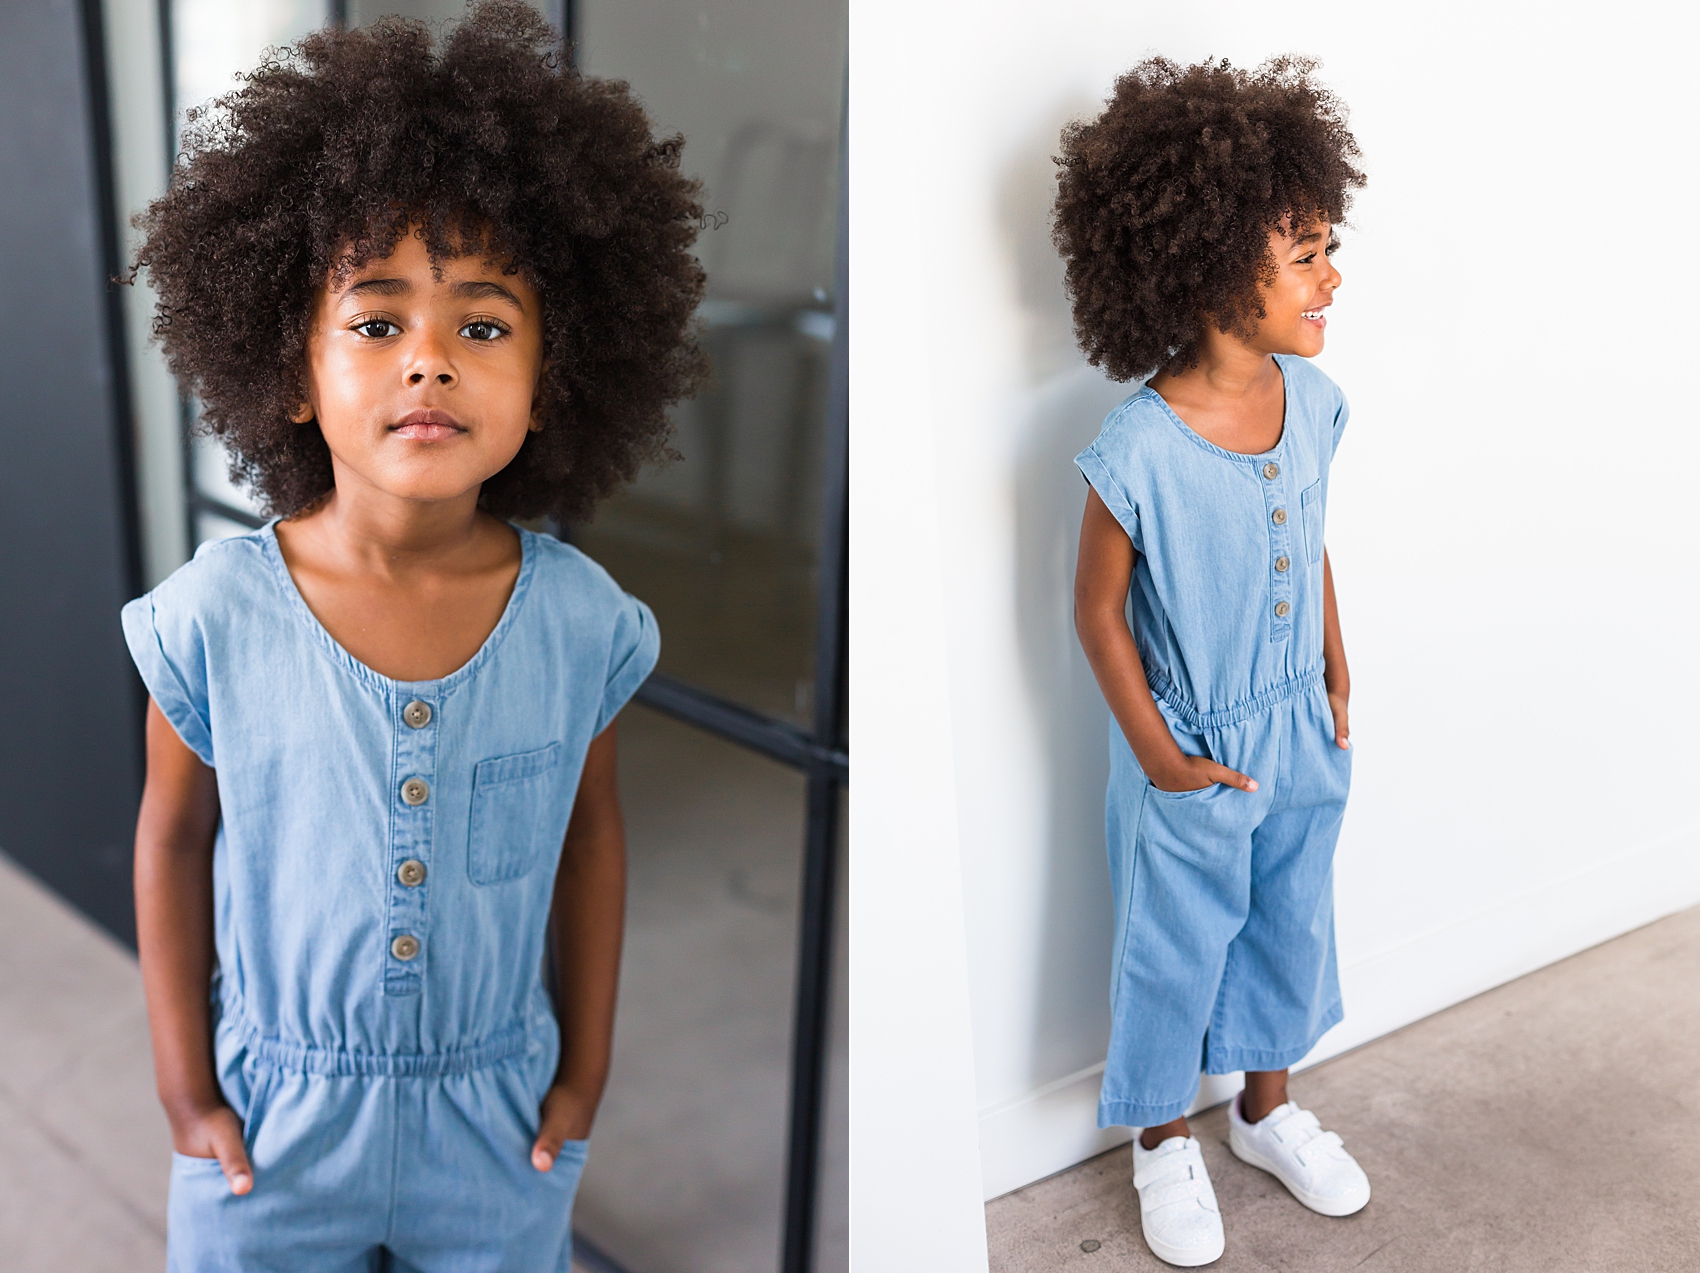 Leah Hope Photography | Scottsdale Phoenix Arizona Teaspressa Lifestyle Head Shots Child Modeling Pictures